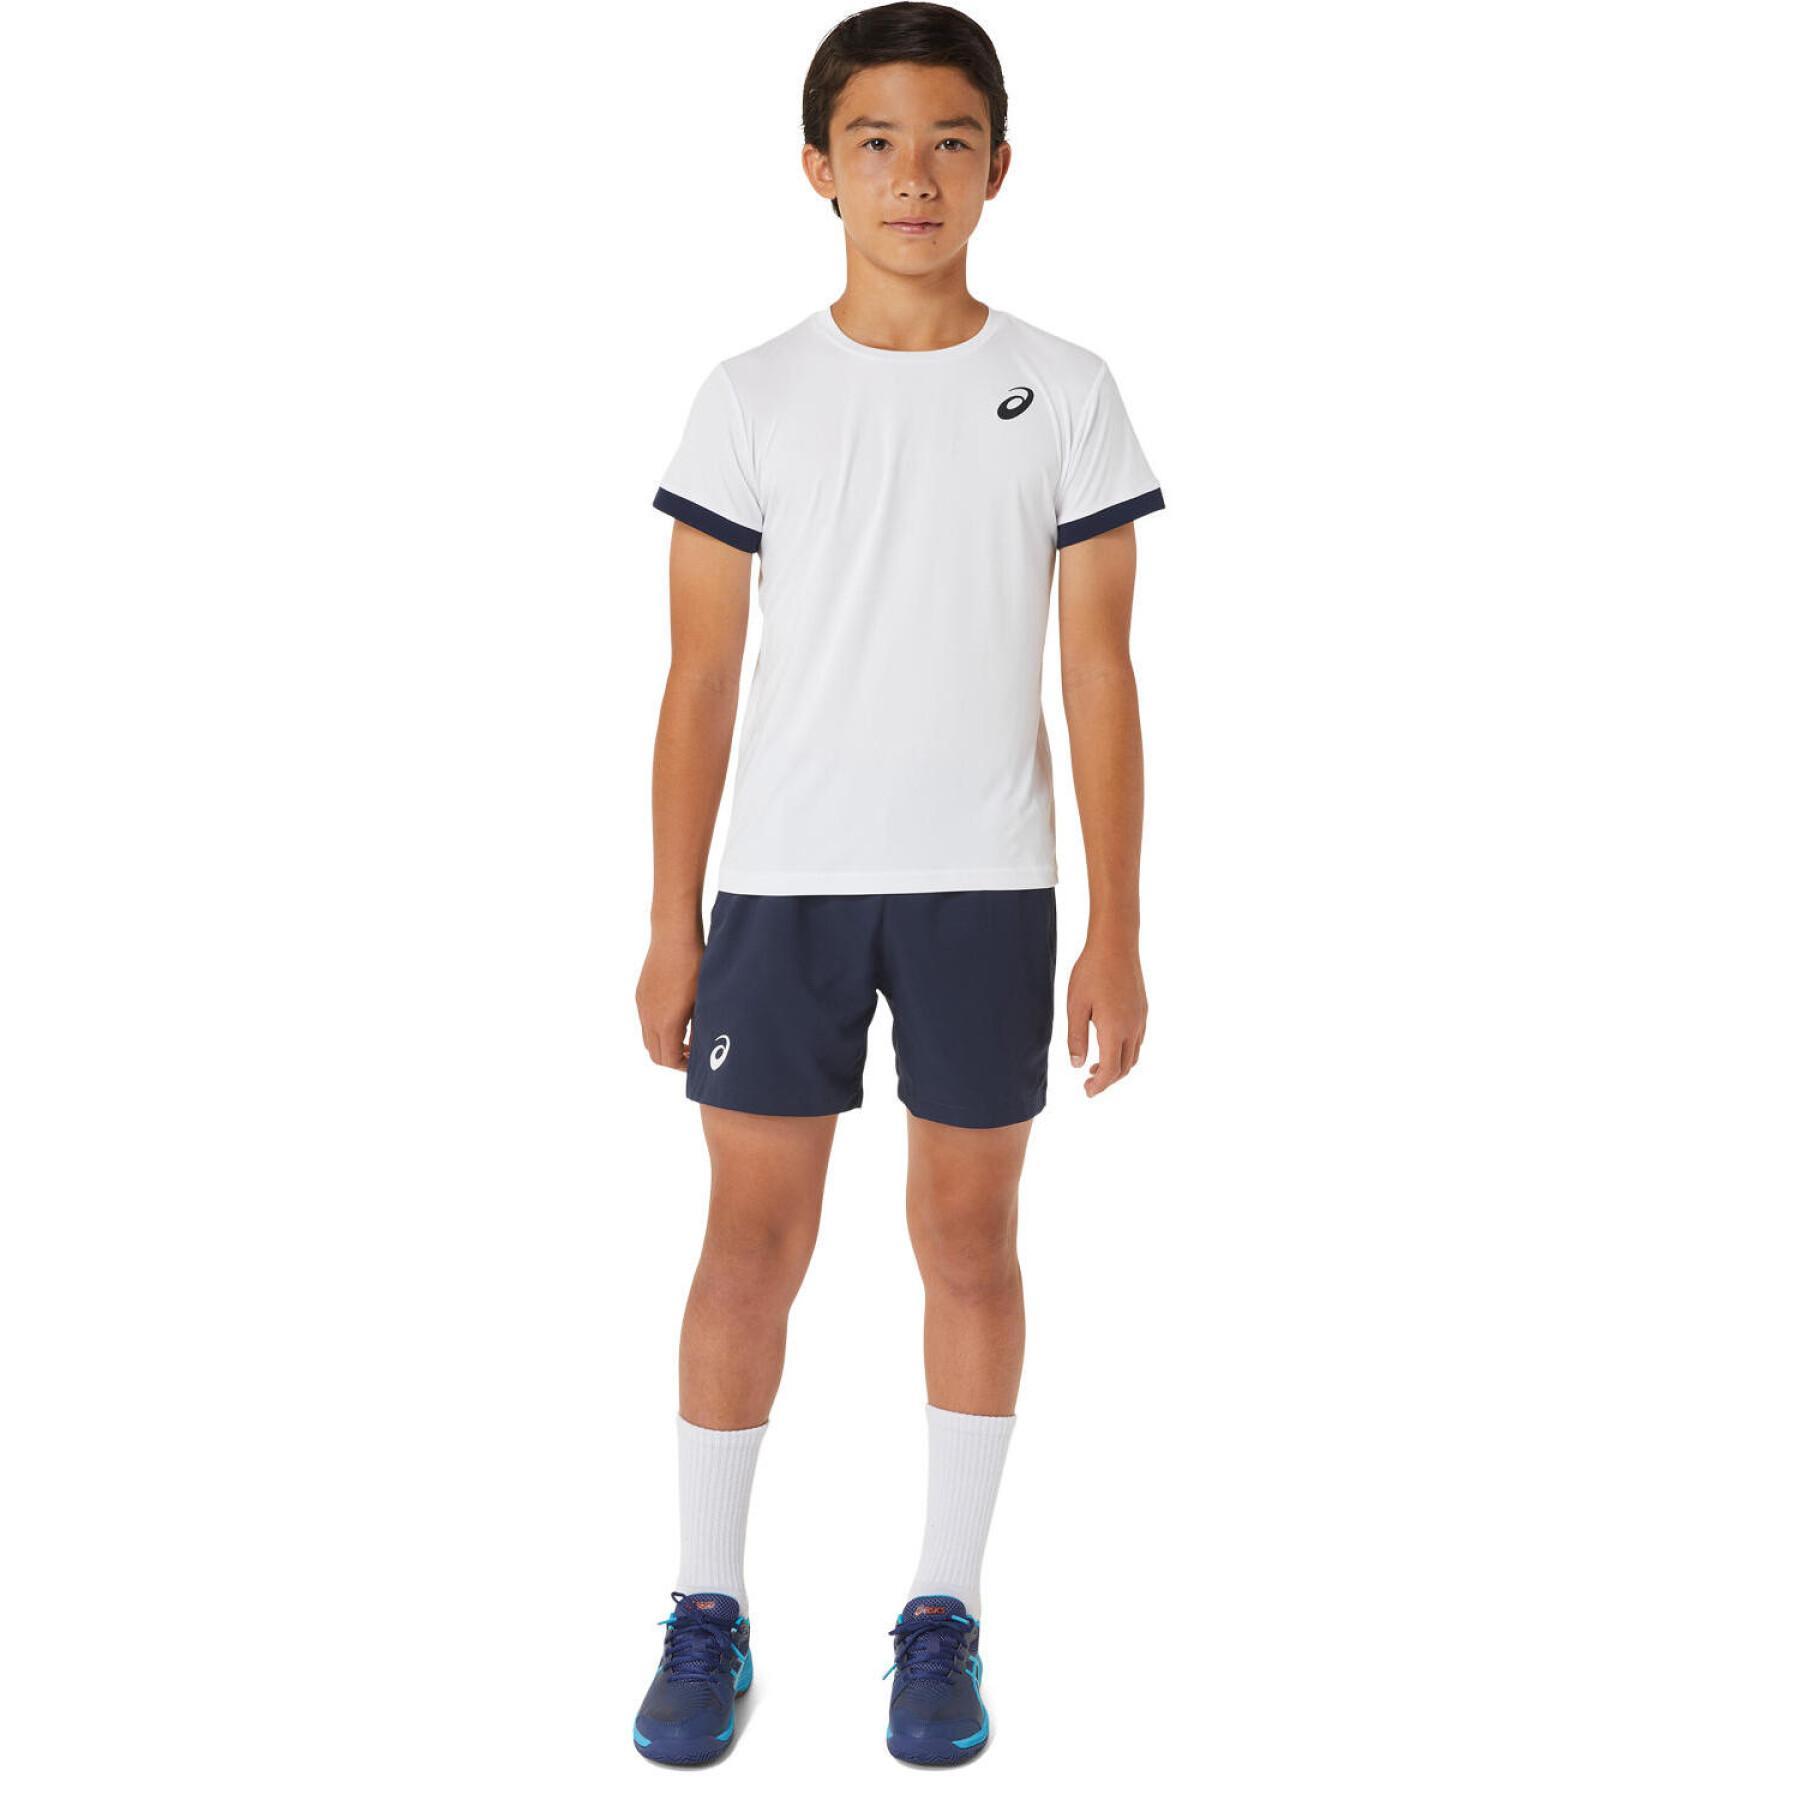 Child tennis shirt Asics